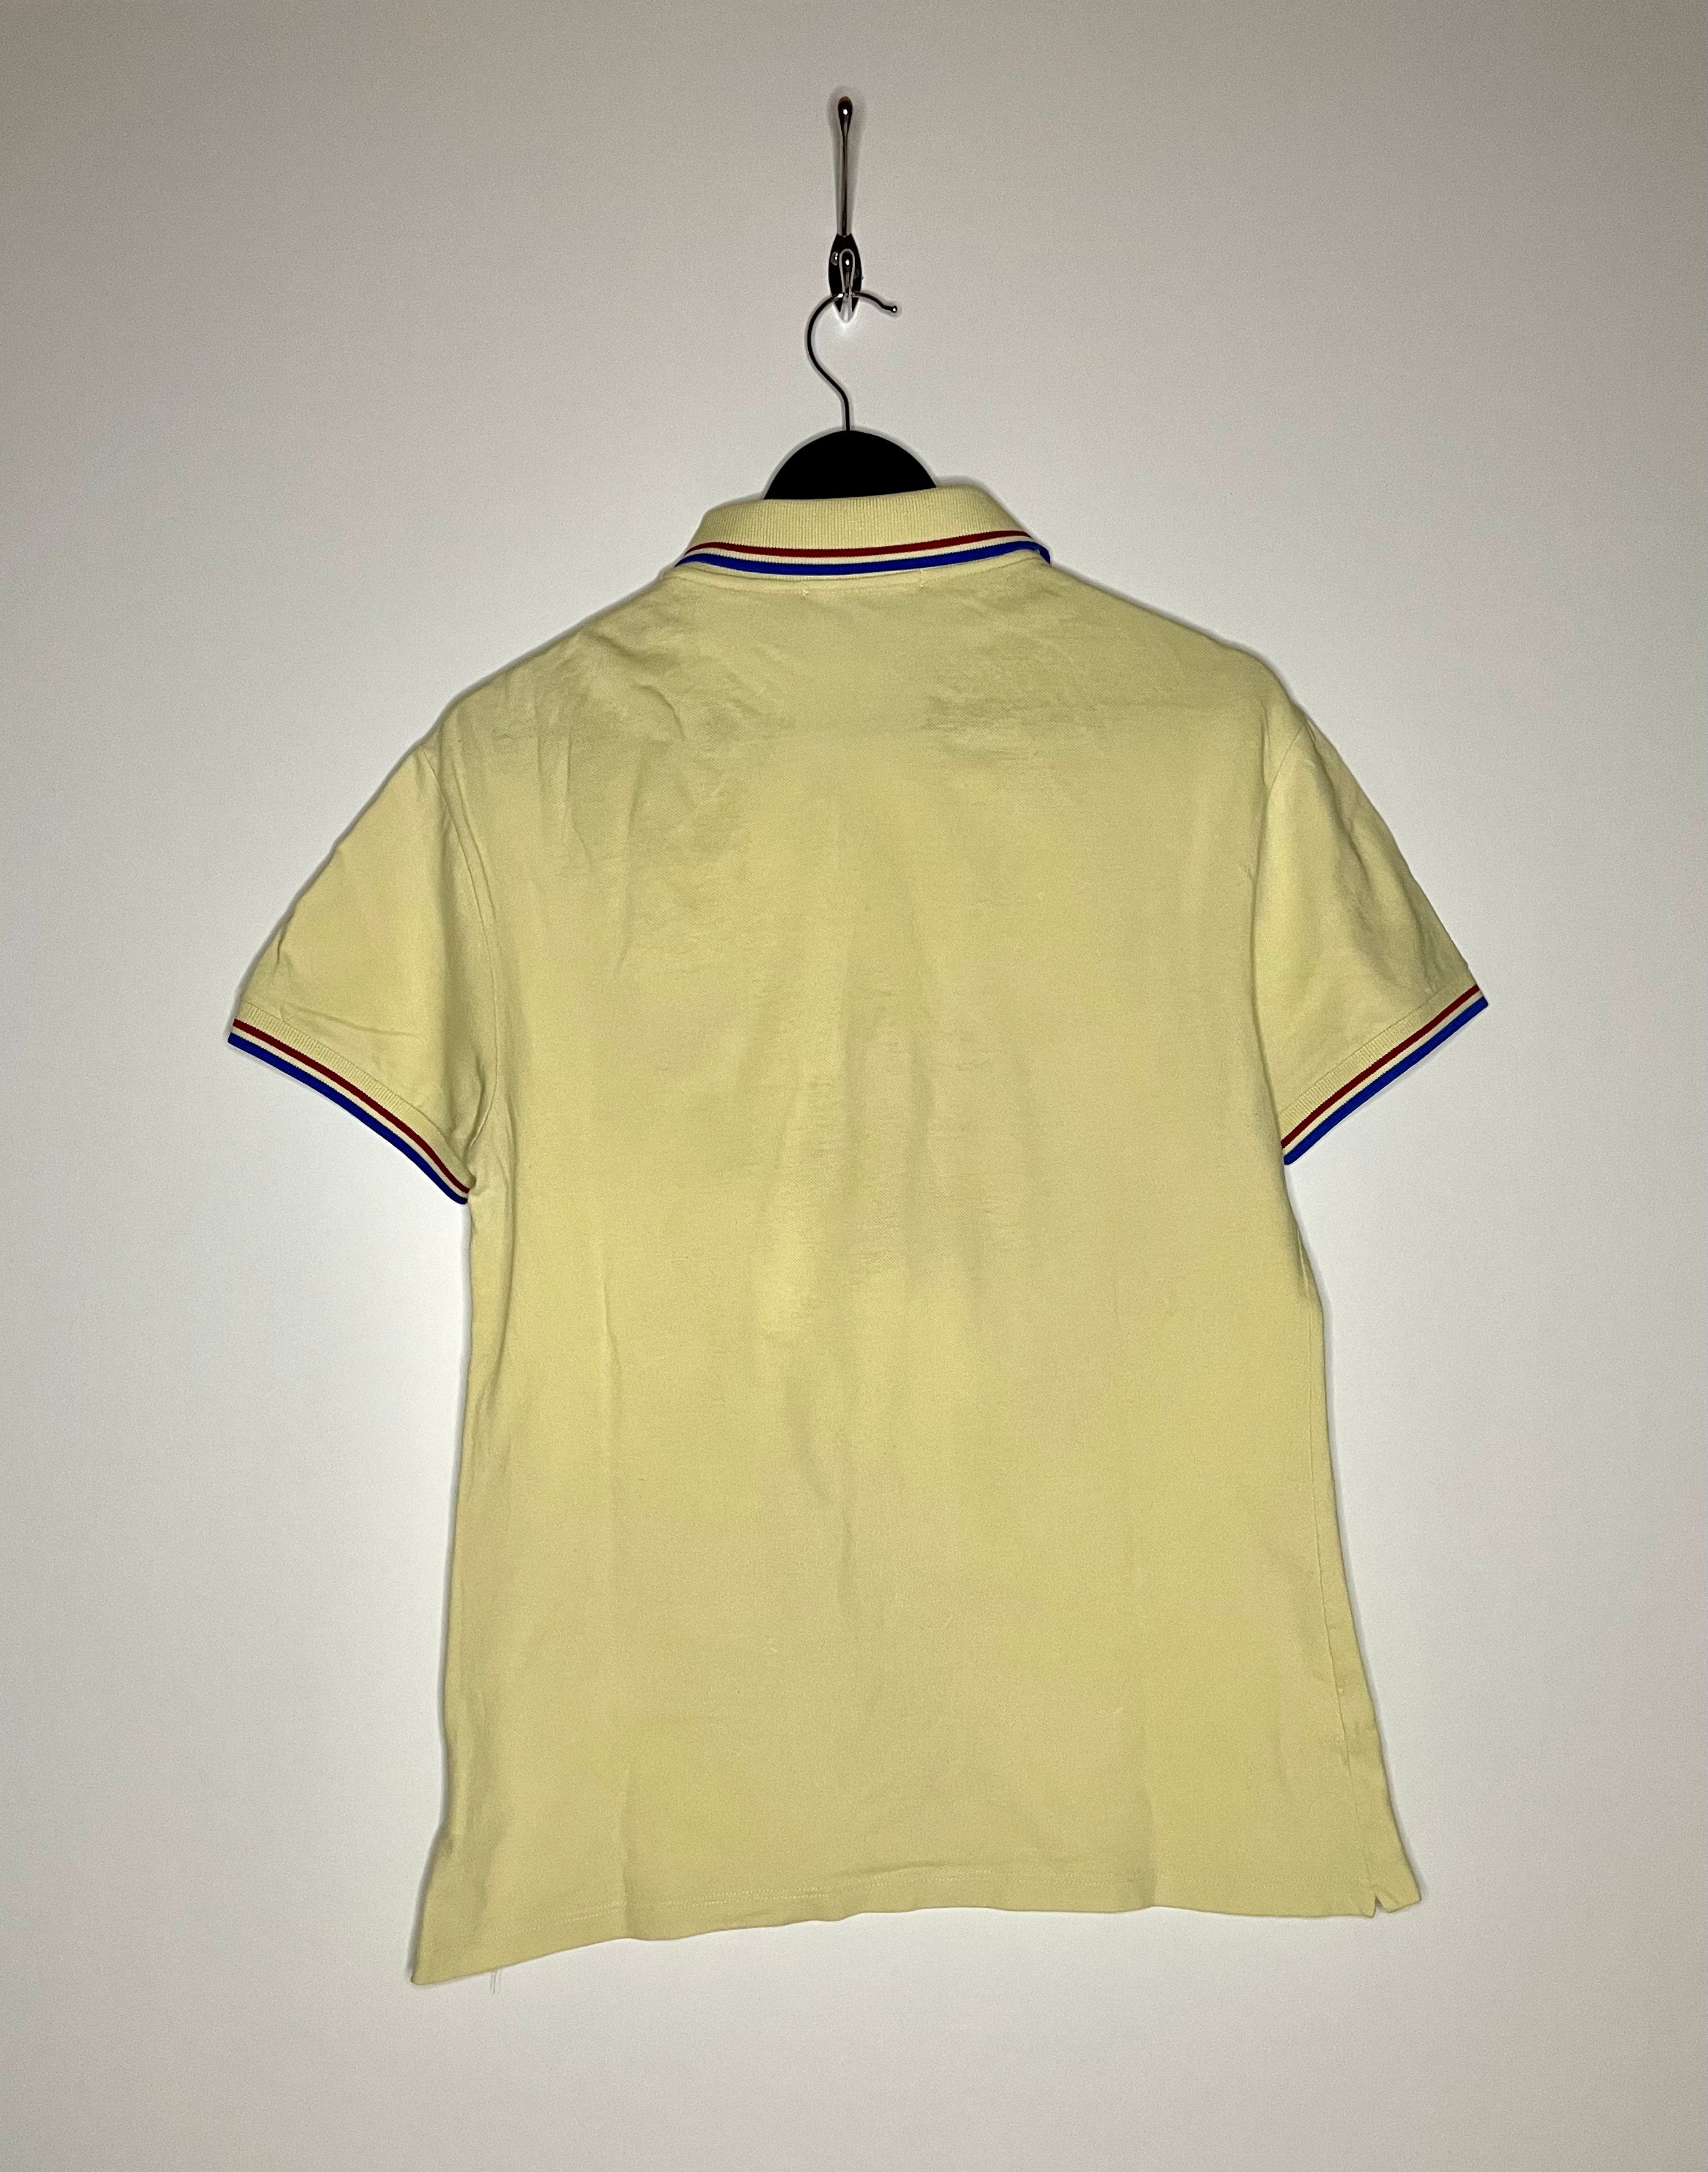 Fred Perry Vintage Poloshirt Gelb Größe M